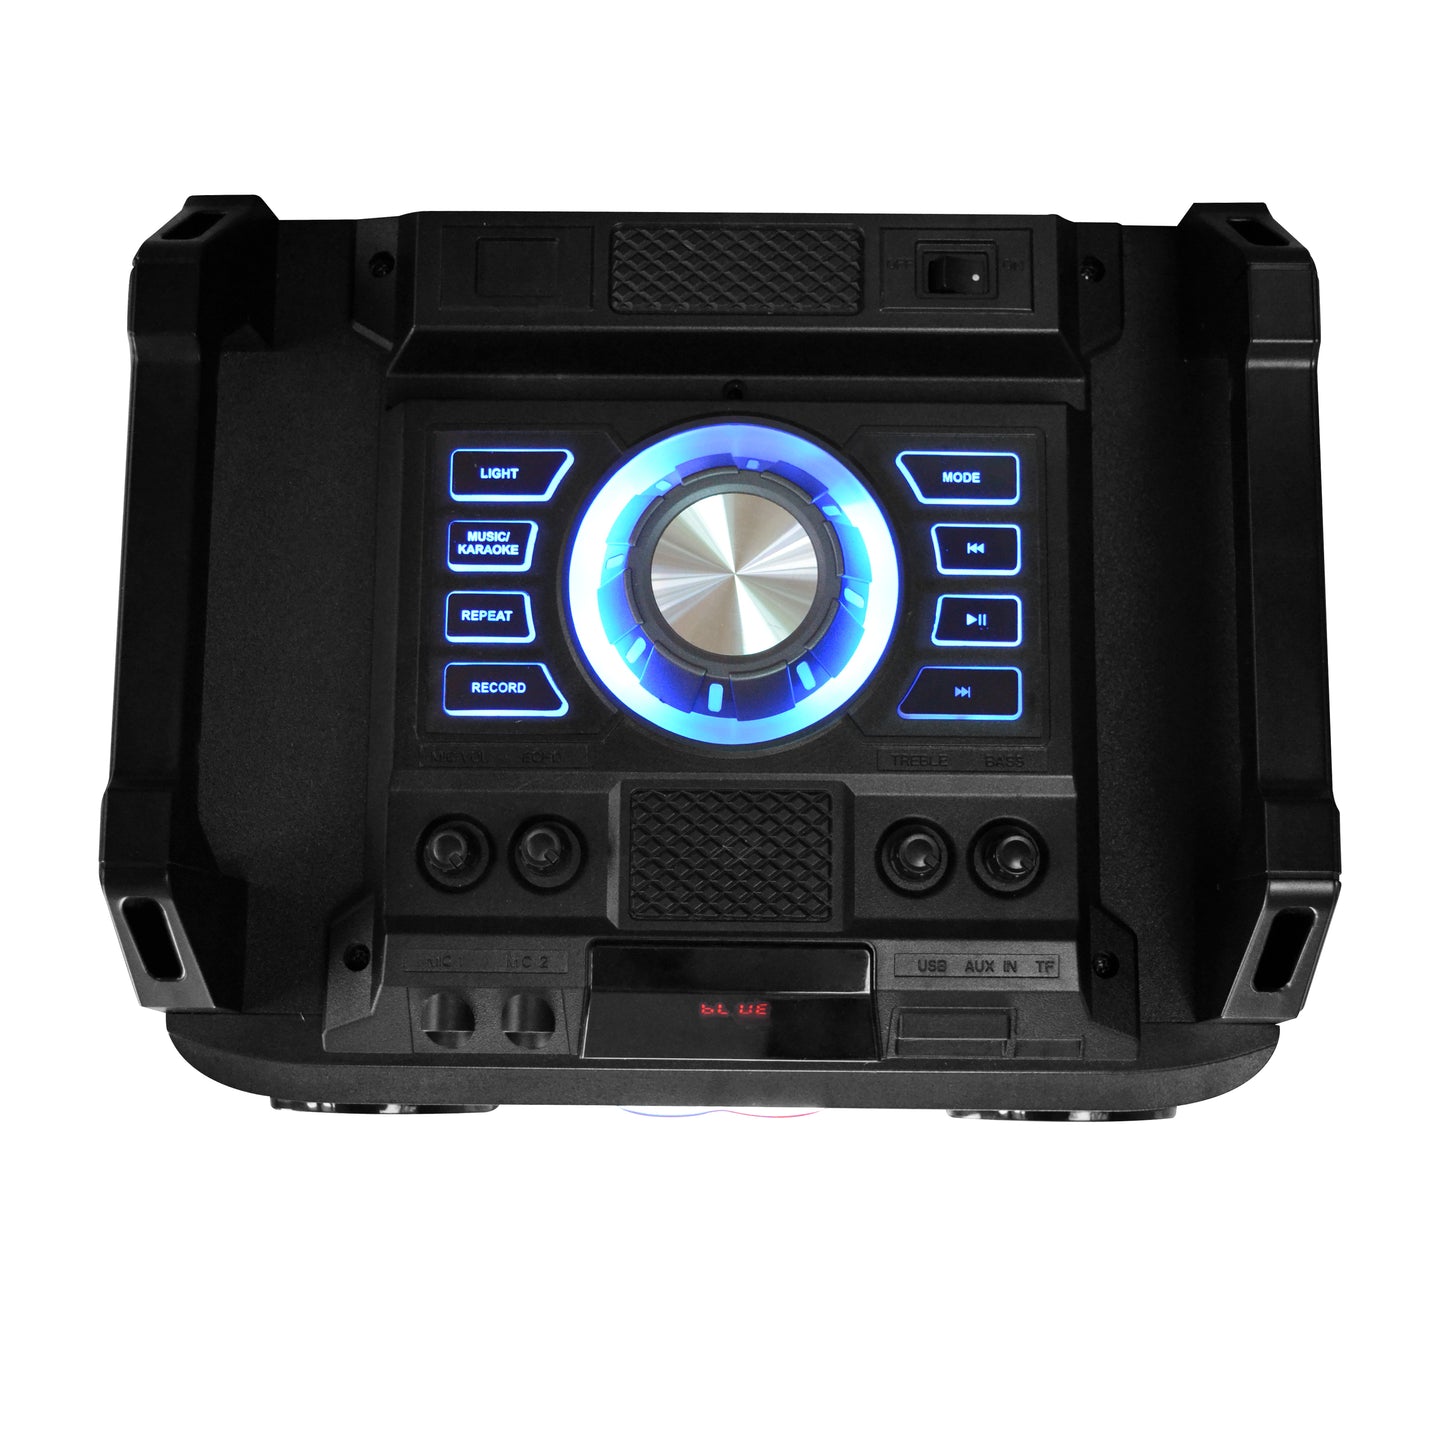 2 x 10” Pro Bluetooth® Speaker